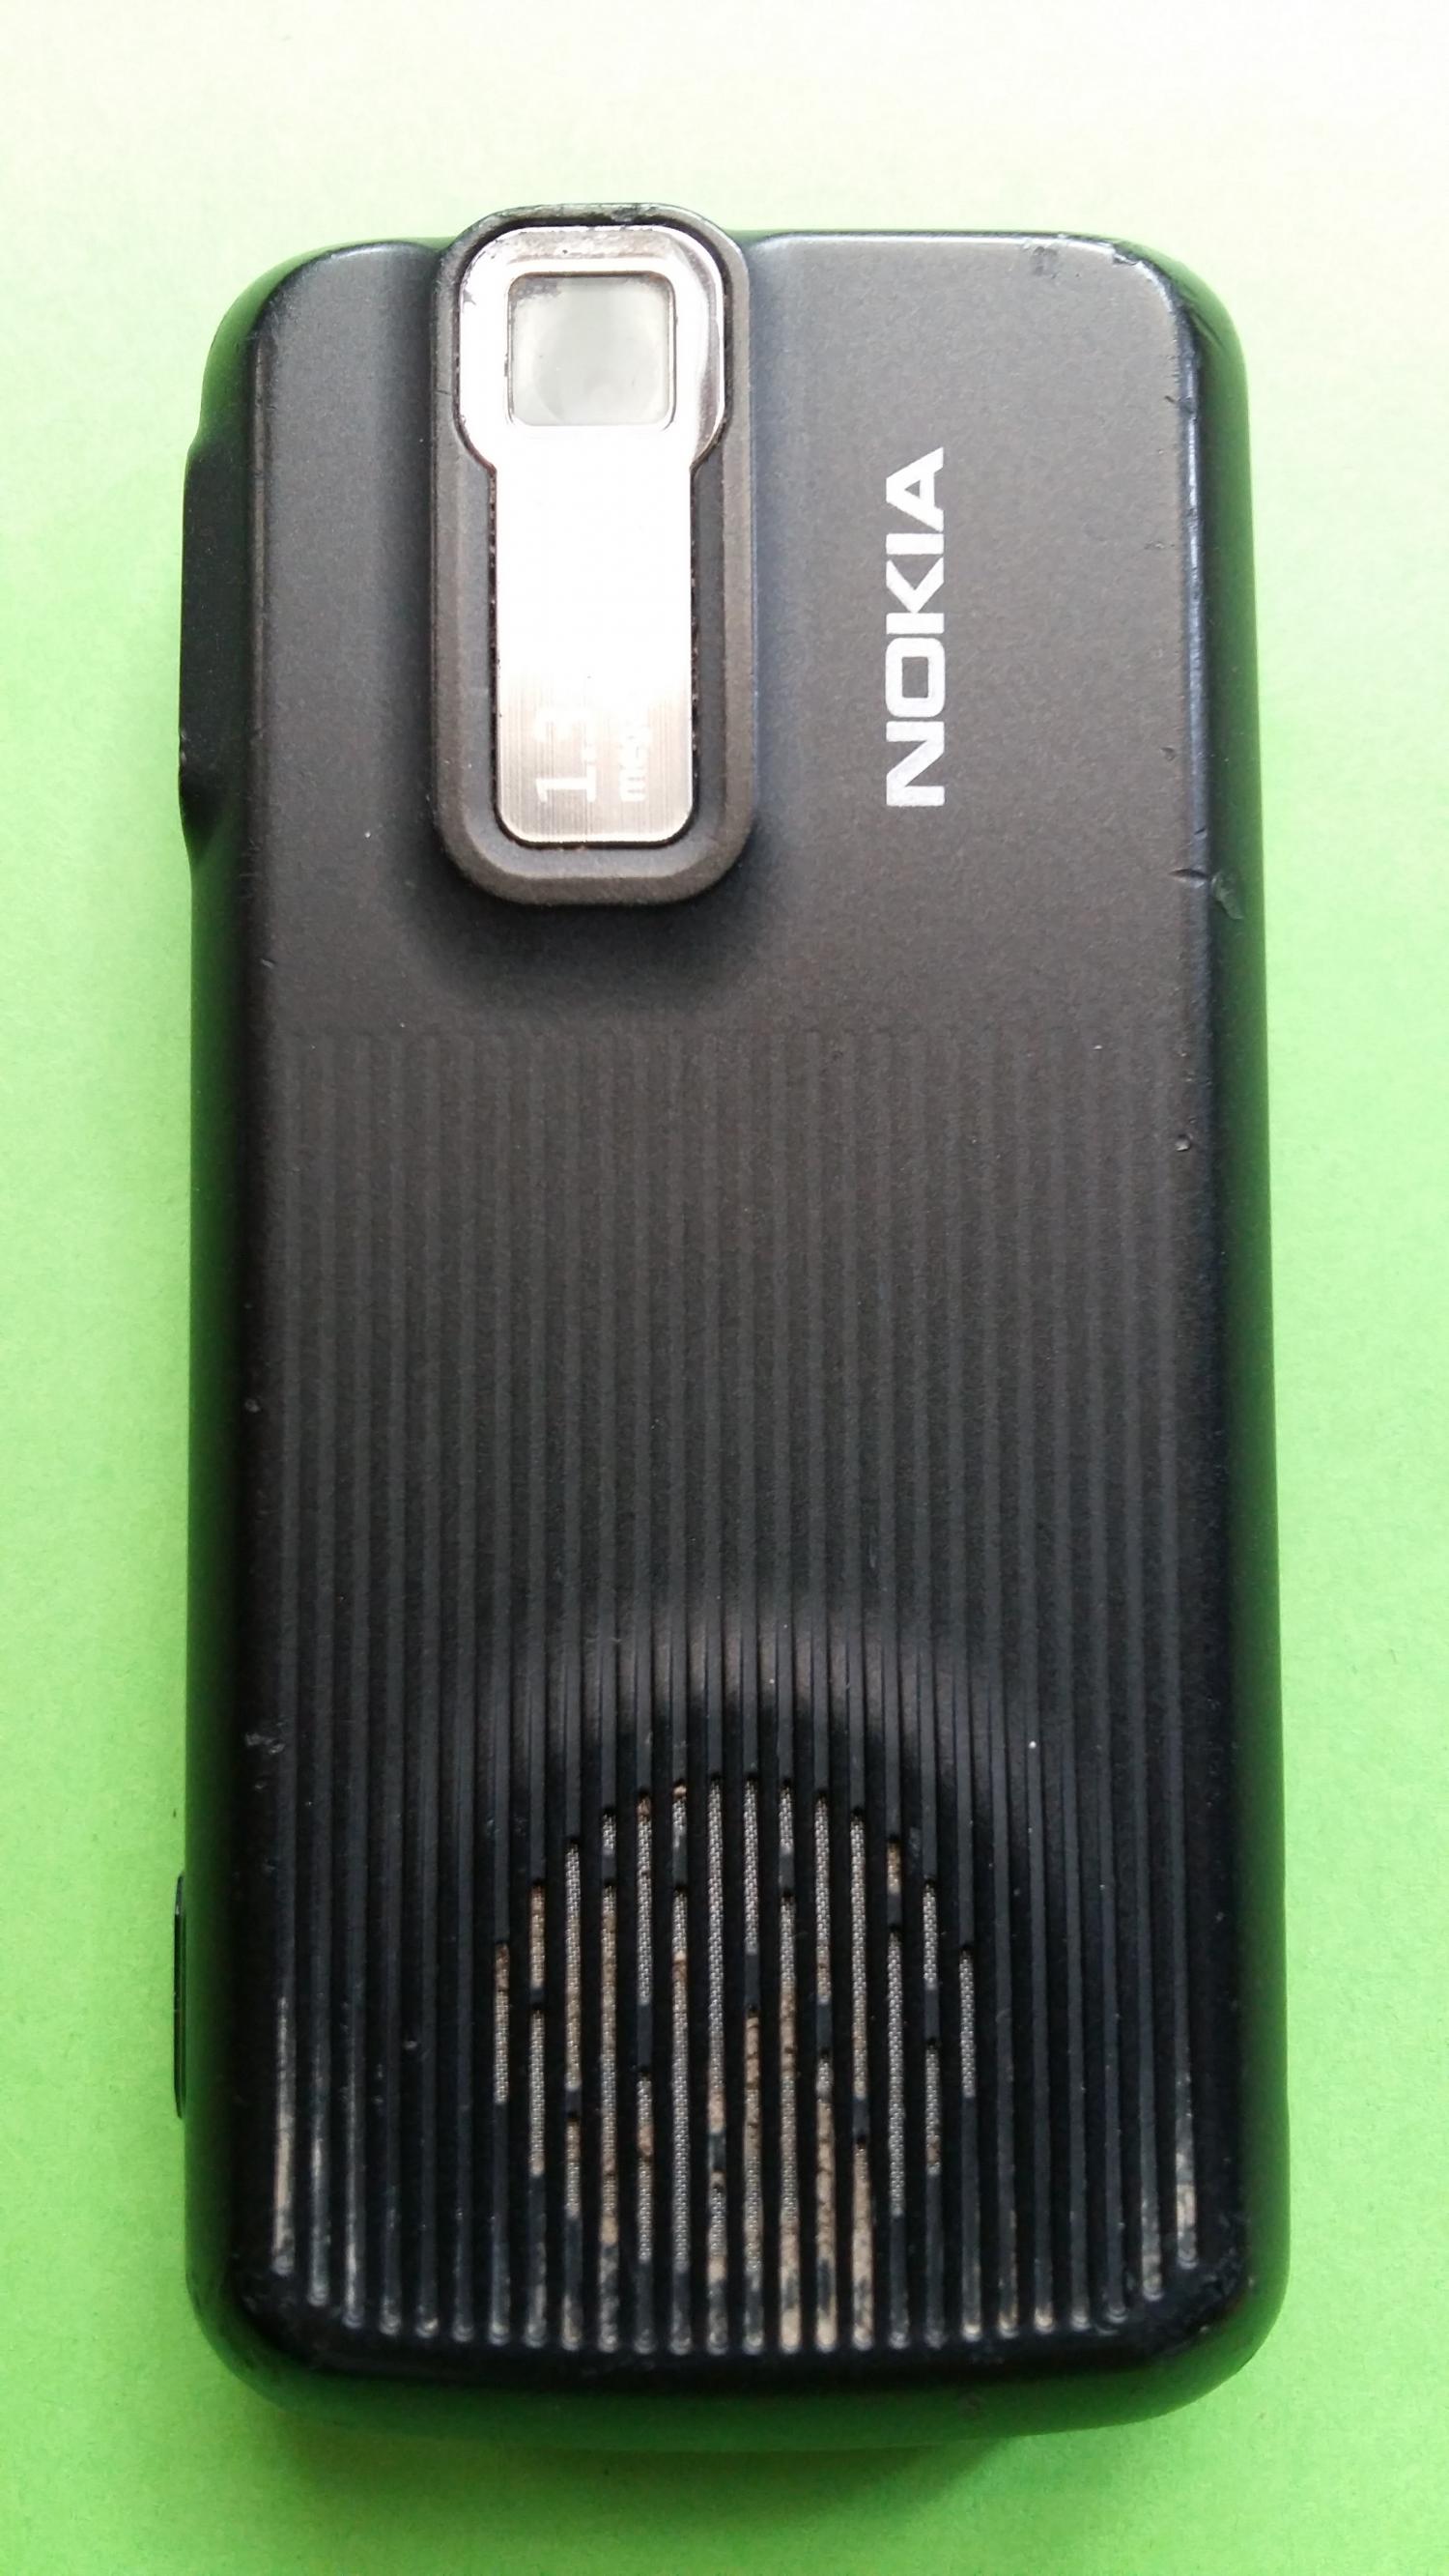 image-7321415-Nokia 7100S-2 Supernova (1)5.jpg?1594650609794